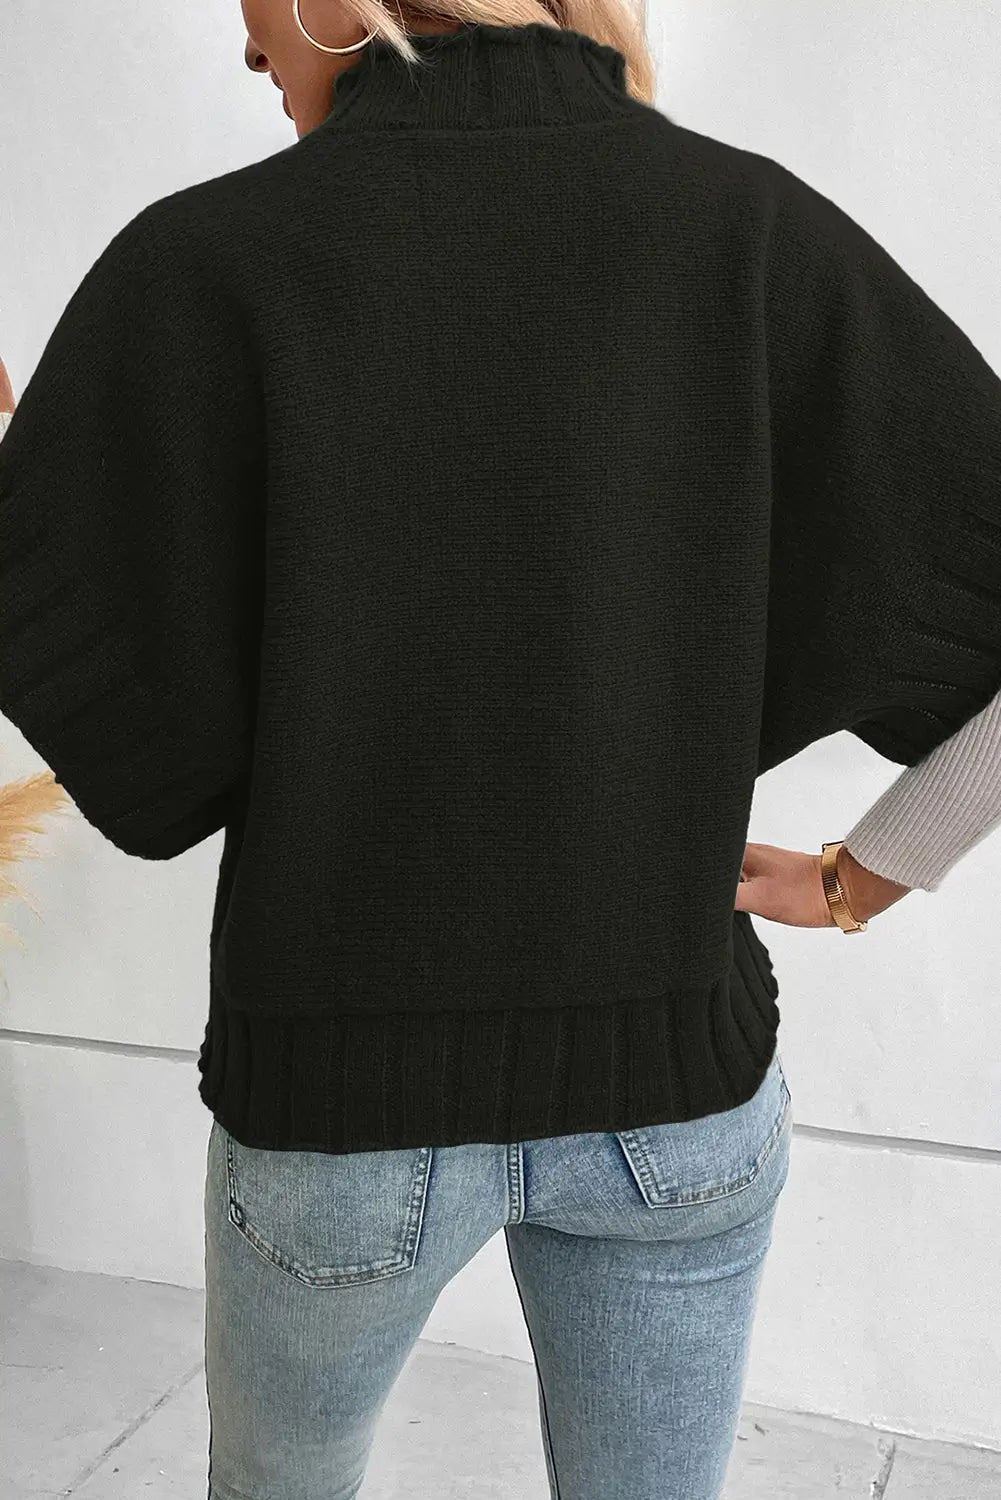 Black mock neck batwing short sleeve knit sweater - sweaters & cardigans